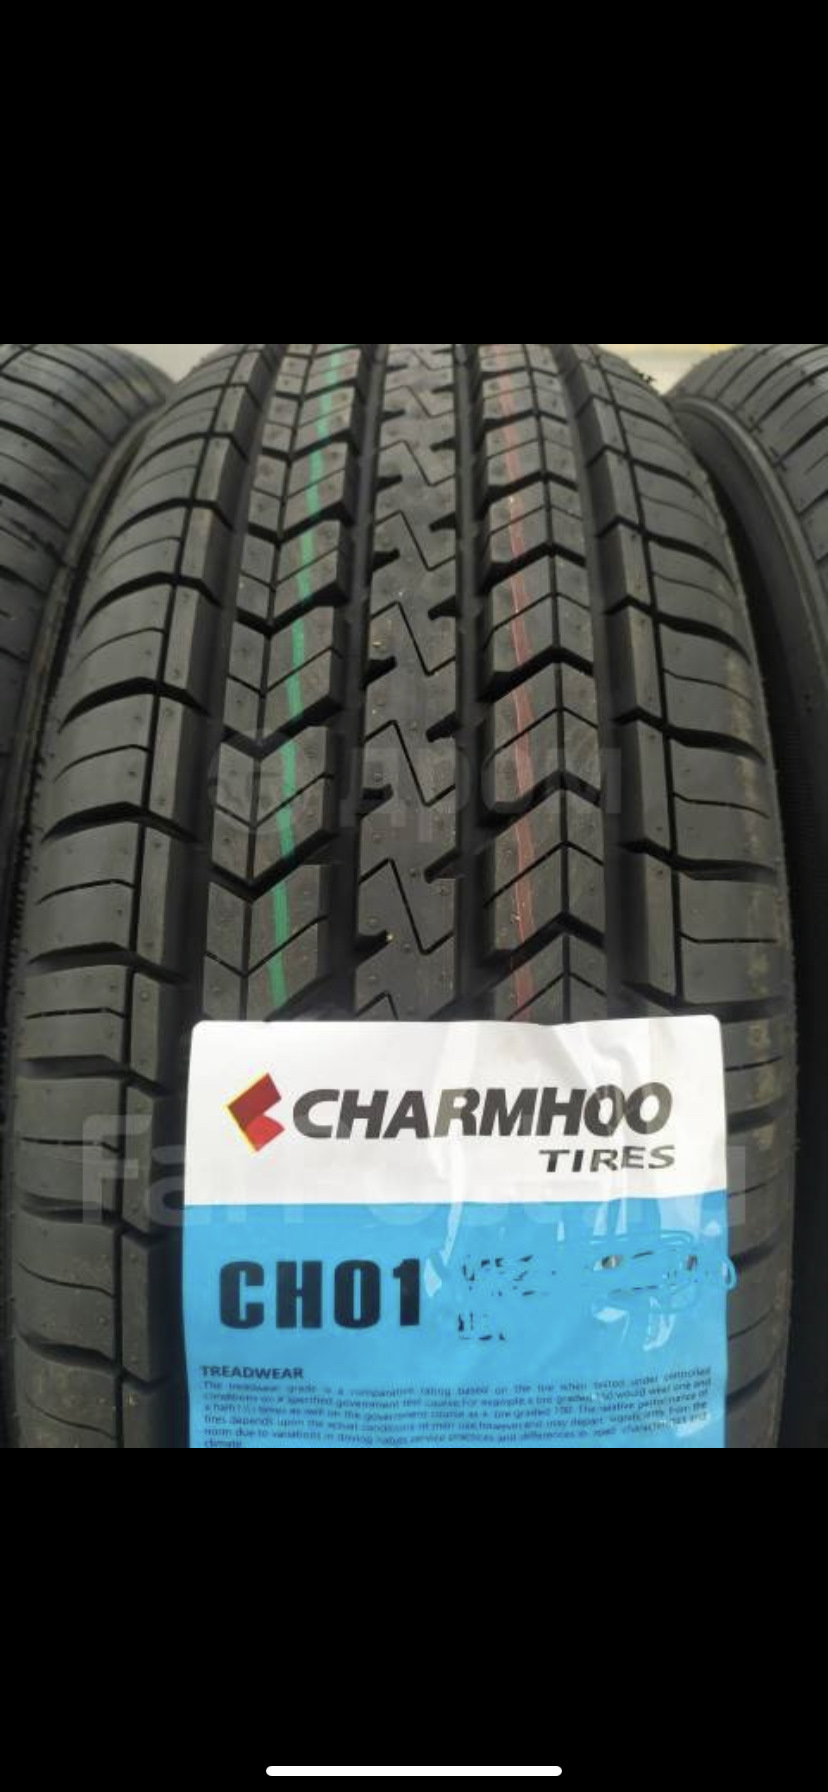 Charmhoo sports отзывы. Charmhoo ch01 Touring. 205/70r15 Charmhoo 96h ch01 Touring. Charmhoo Touring ch01 225 / 45 / r17. Шины Charmhoo ch01.